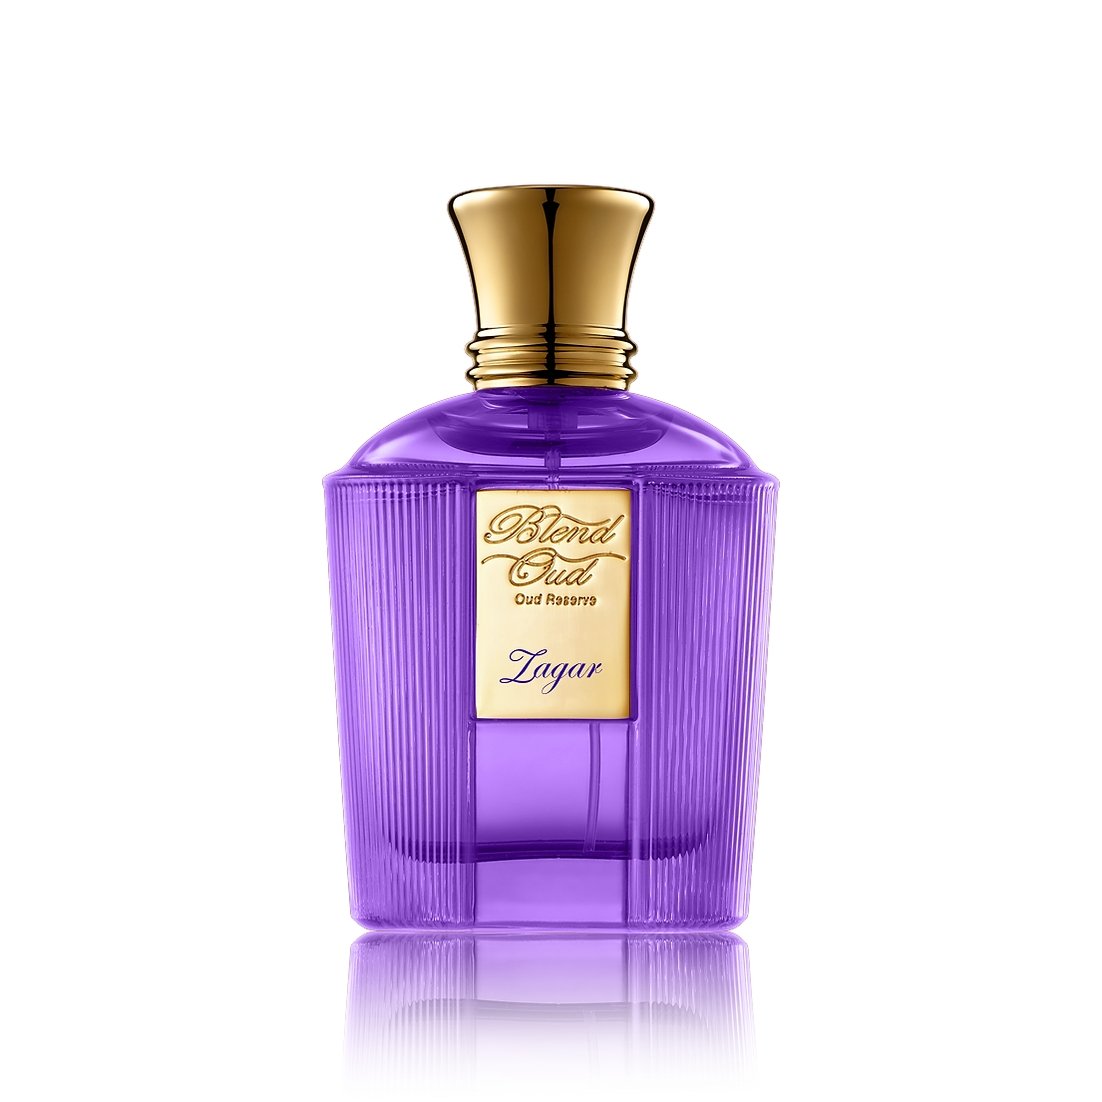 Blend Oud Zagar Perfume & Cologne 2 oz/60 ml ScentRabbit